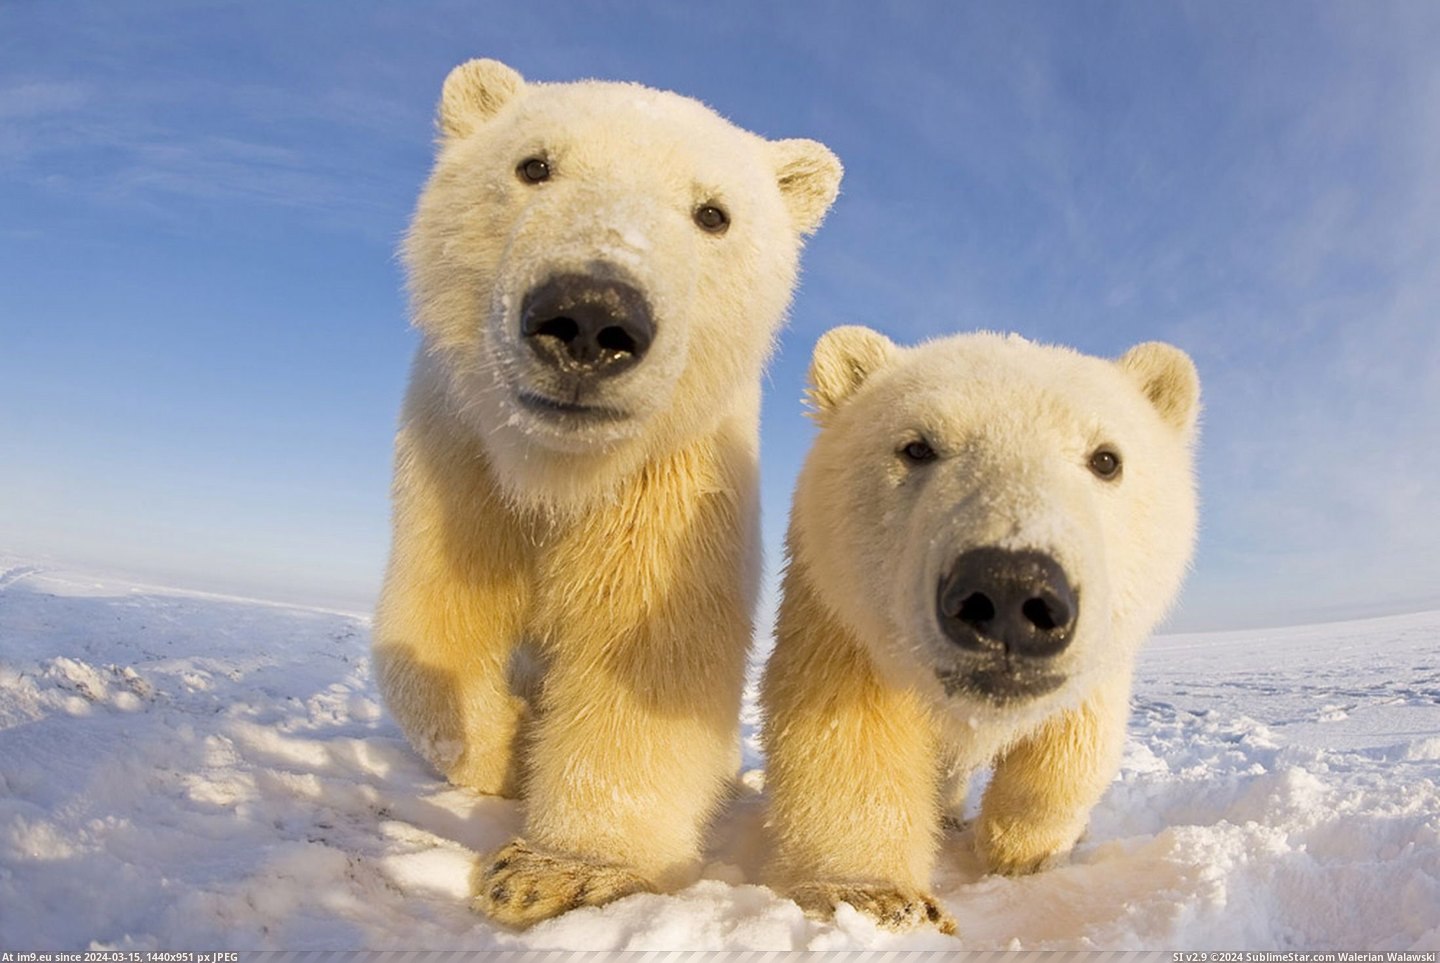 #May #Are #Strange #Any #Noise #Object #Investigate #Polarbears #Polar #Curious #Smell #Bears [Aww] Polar bears are curious and may investigate any strange object, smell or noise (polarbears) Pic. (Bild von album My r/AWW favs))